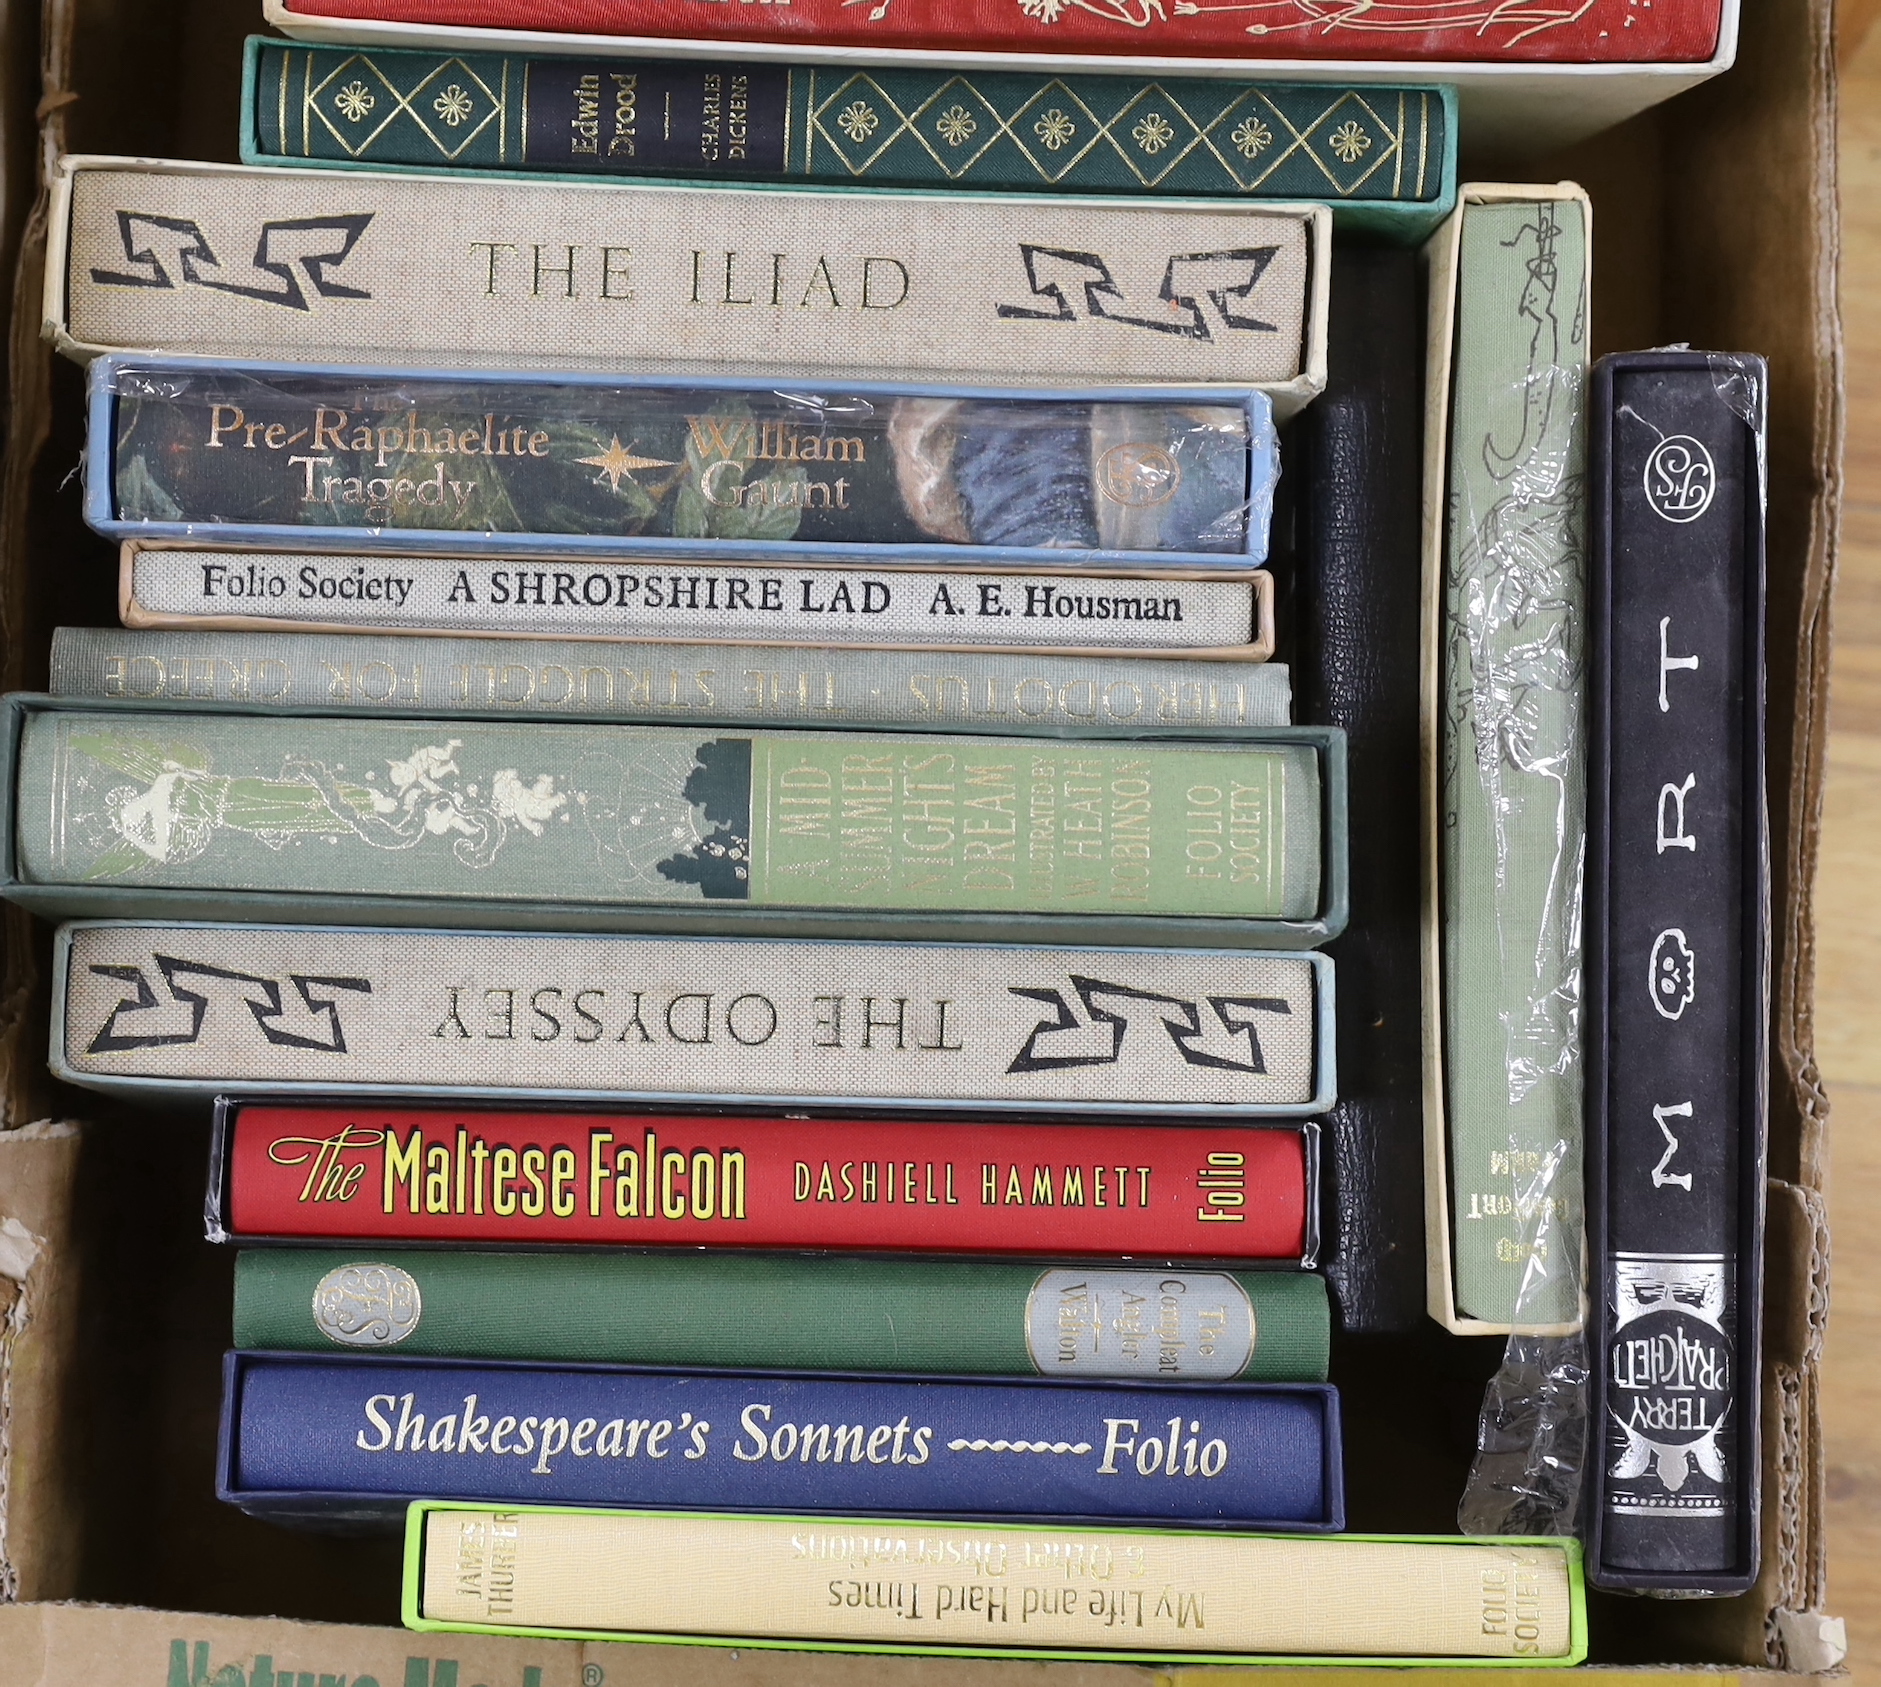 A quantity of various Folio Society books